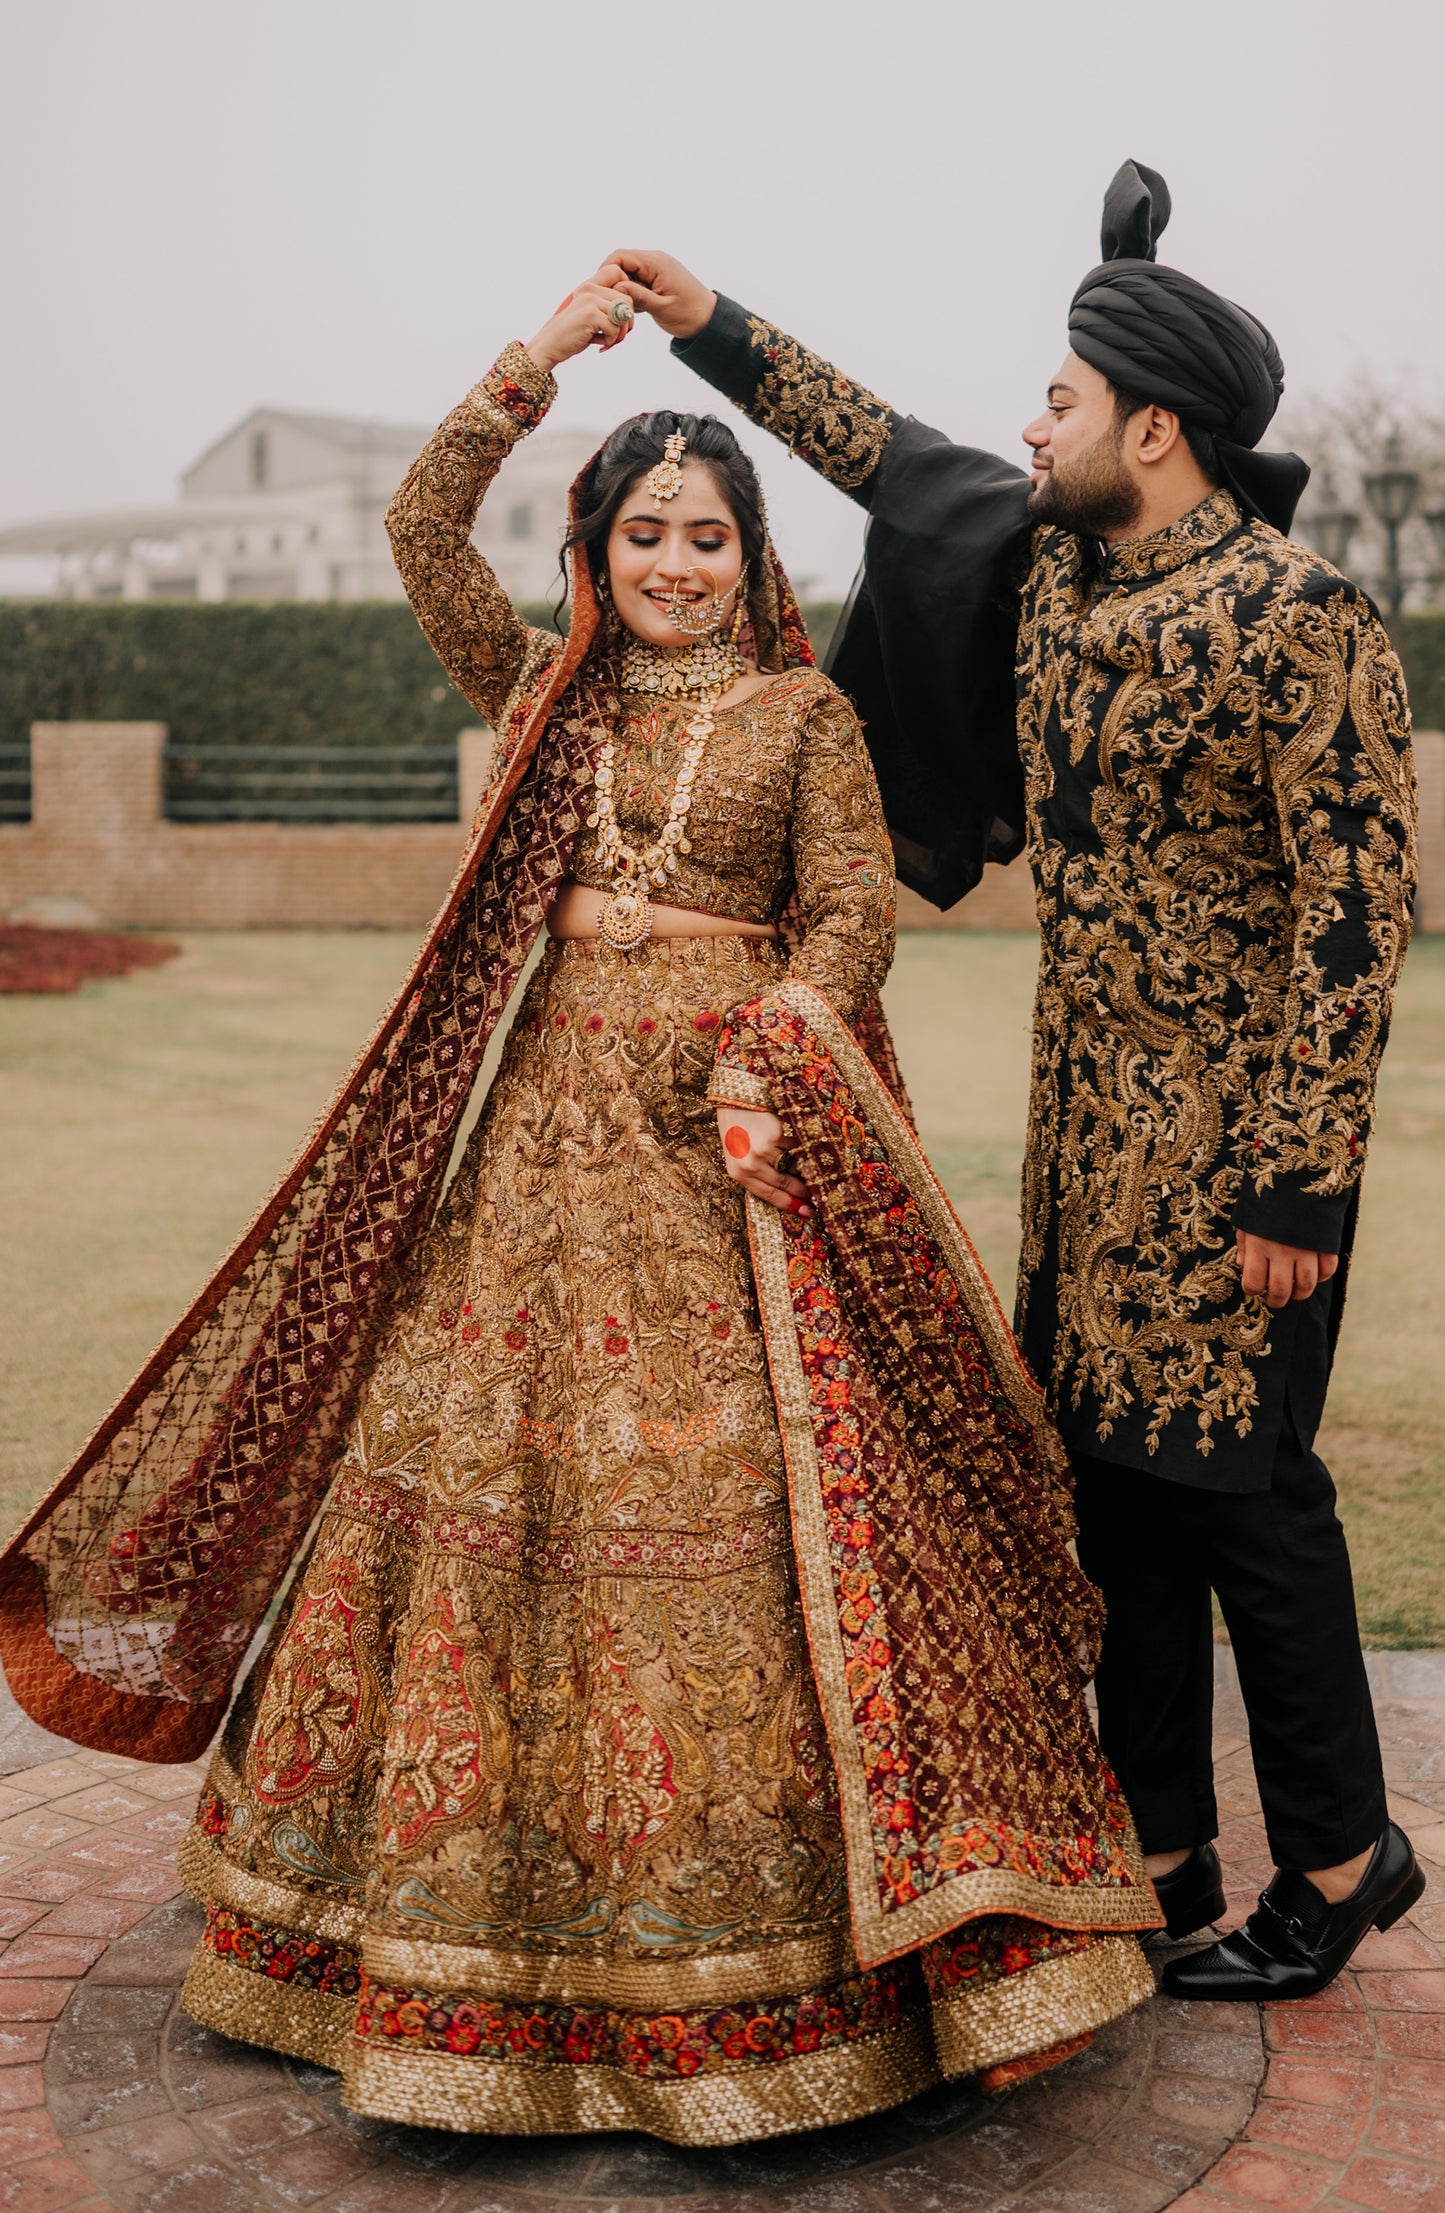 Aroob Jatoi wearing HSY Bridal dress and Ducky bhai wearing HSY designer Sherwani